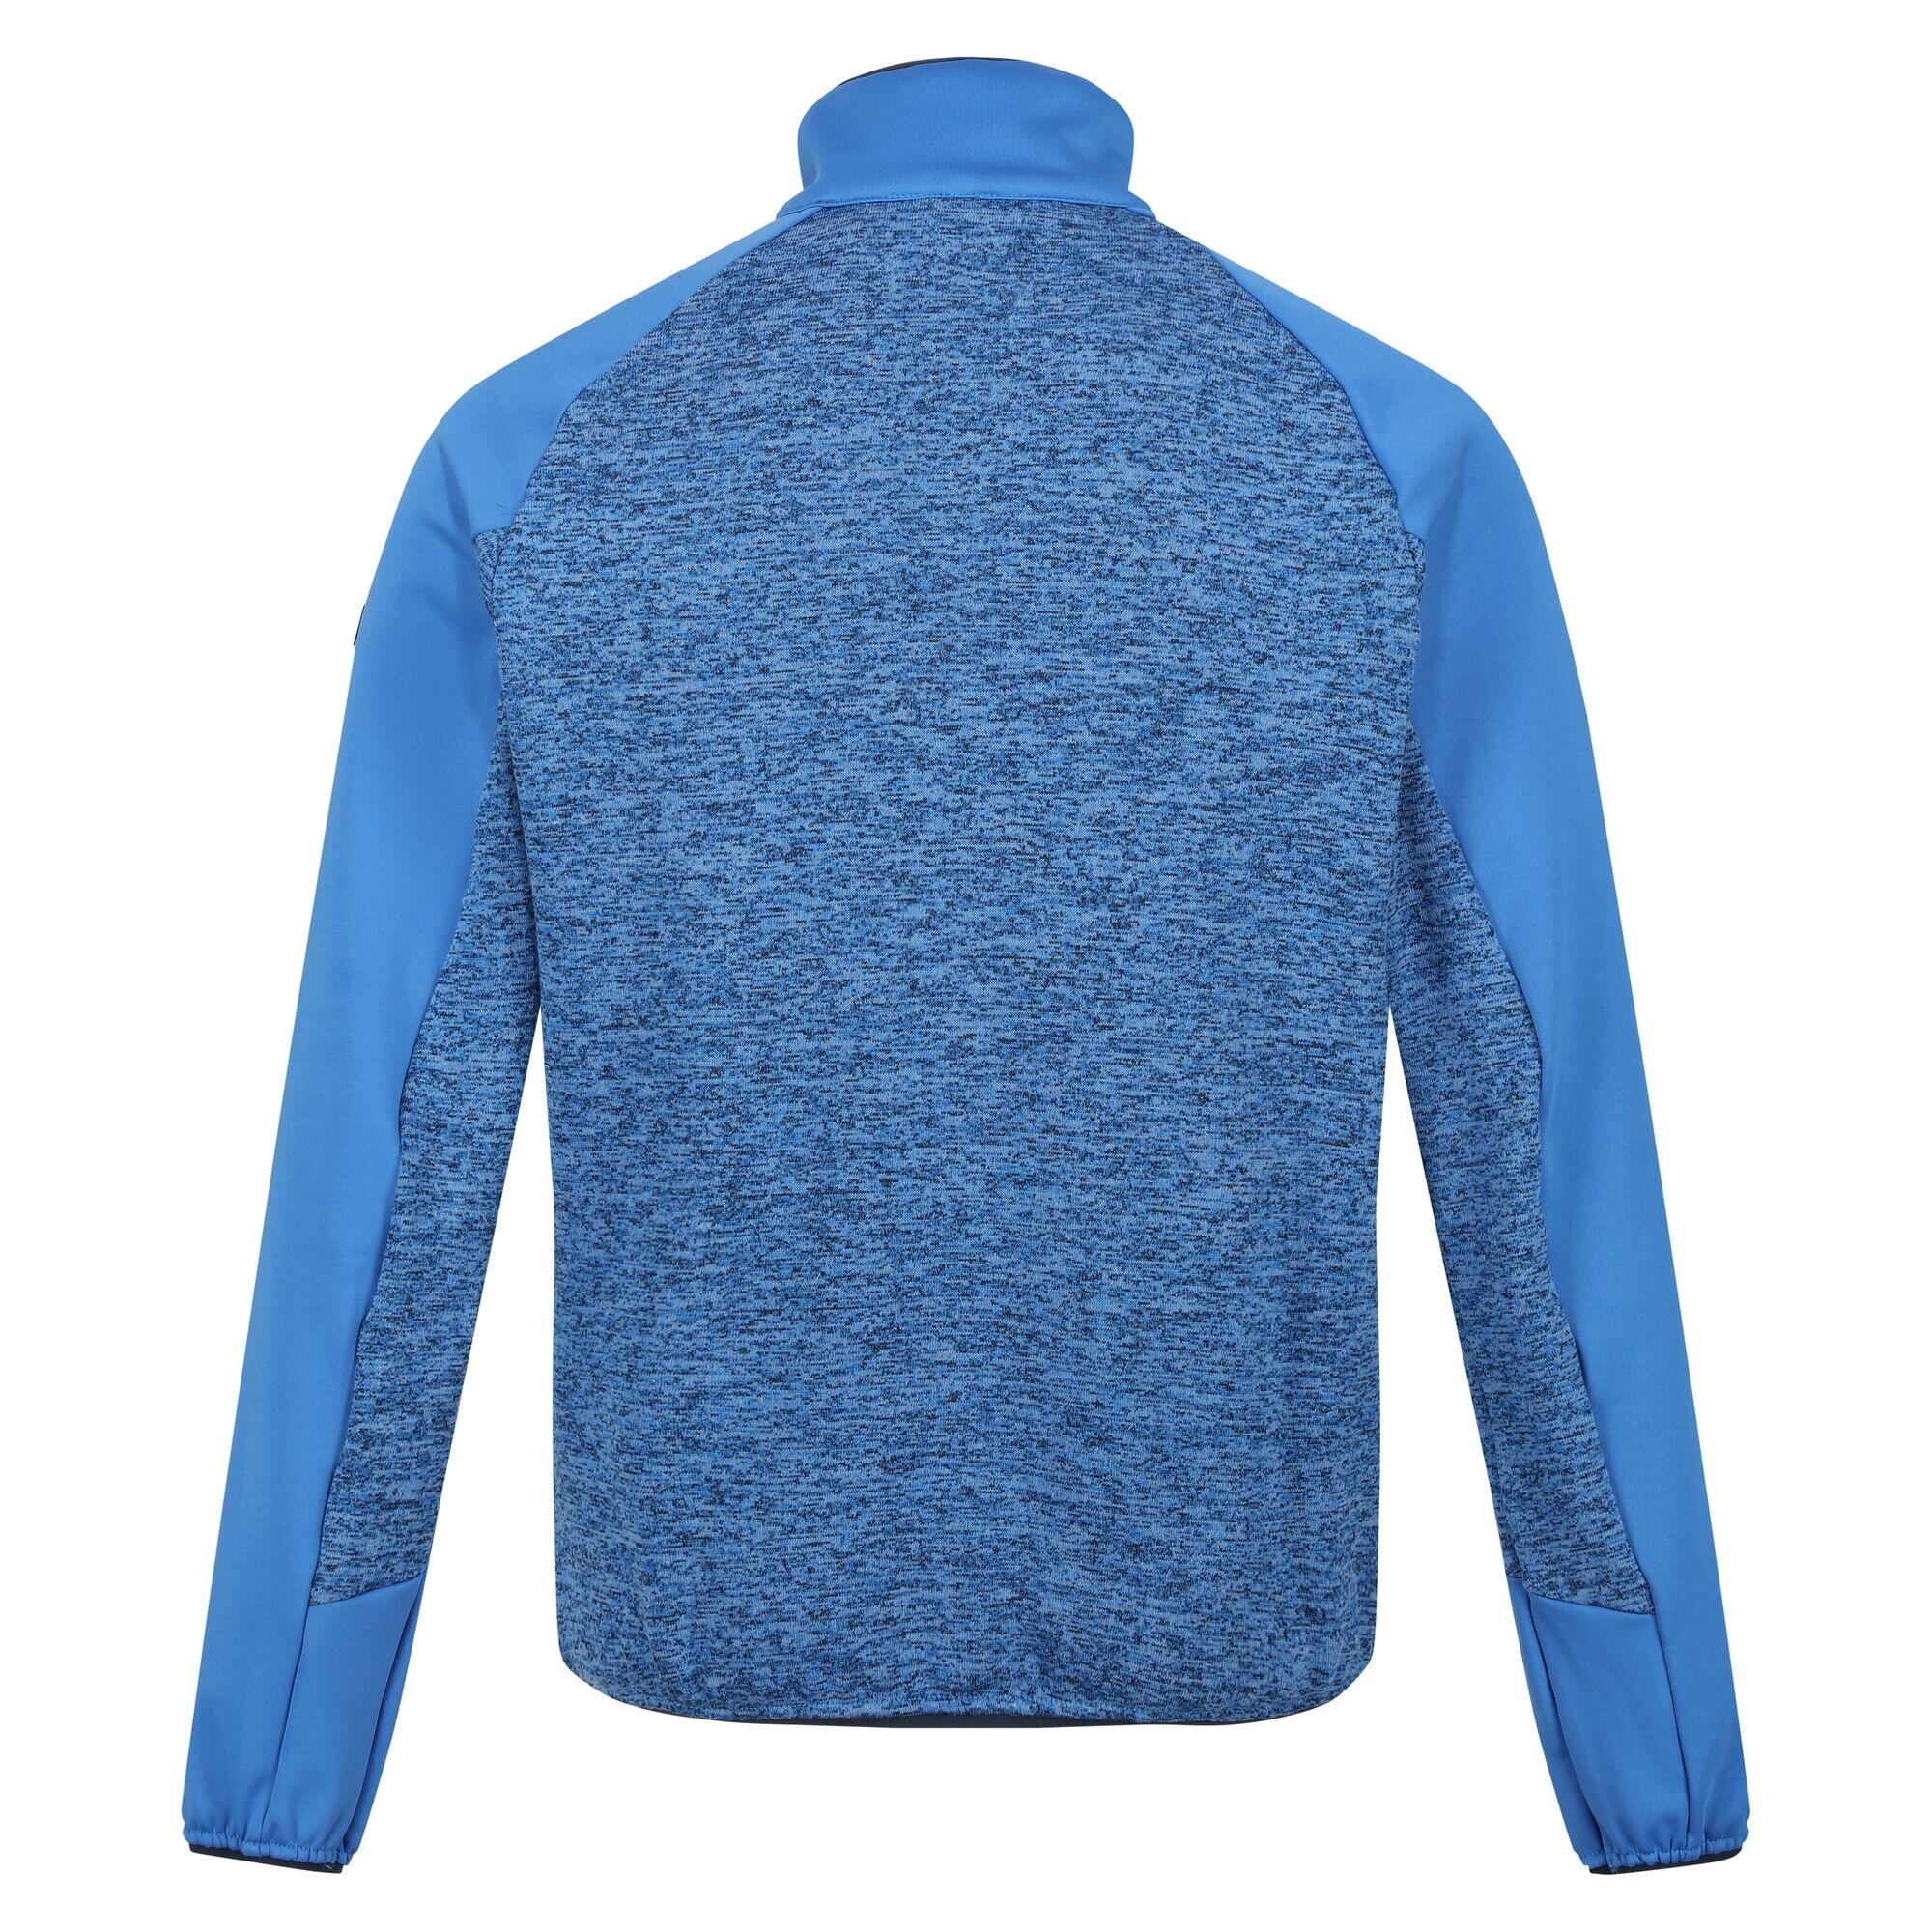 Mens Coladane V Marl Full Zip Fleece Jacket (Strong Blue/Danger Red) 2/5